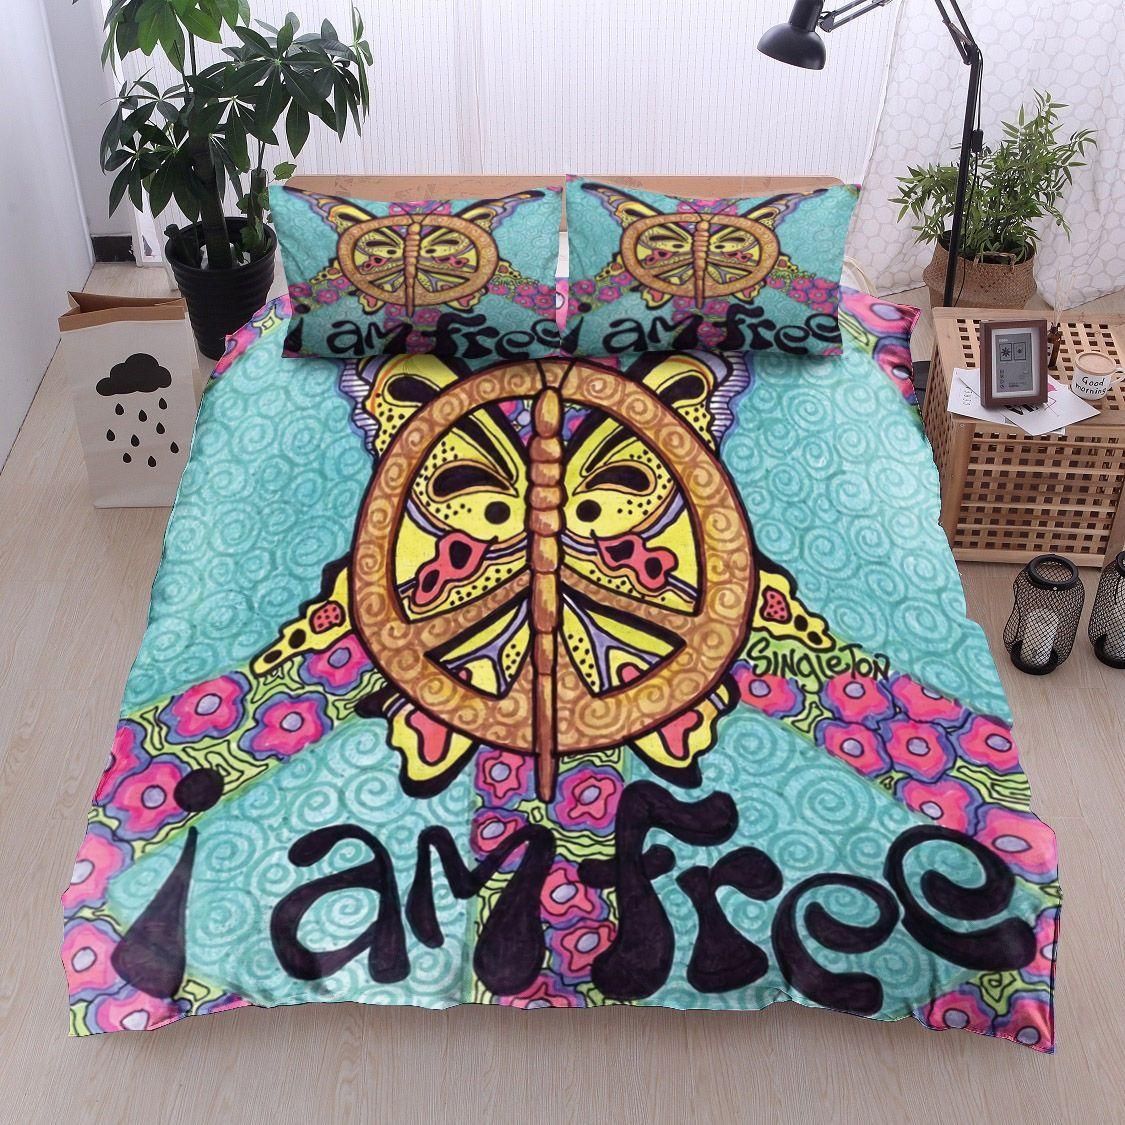 Butterfly "I Am Free" Hippie Duvet Cover Bedding Set